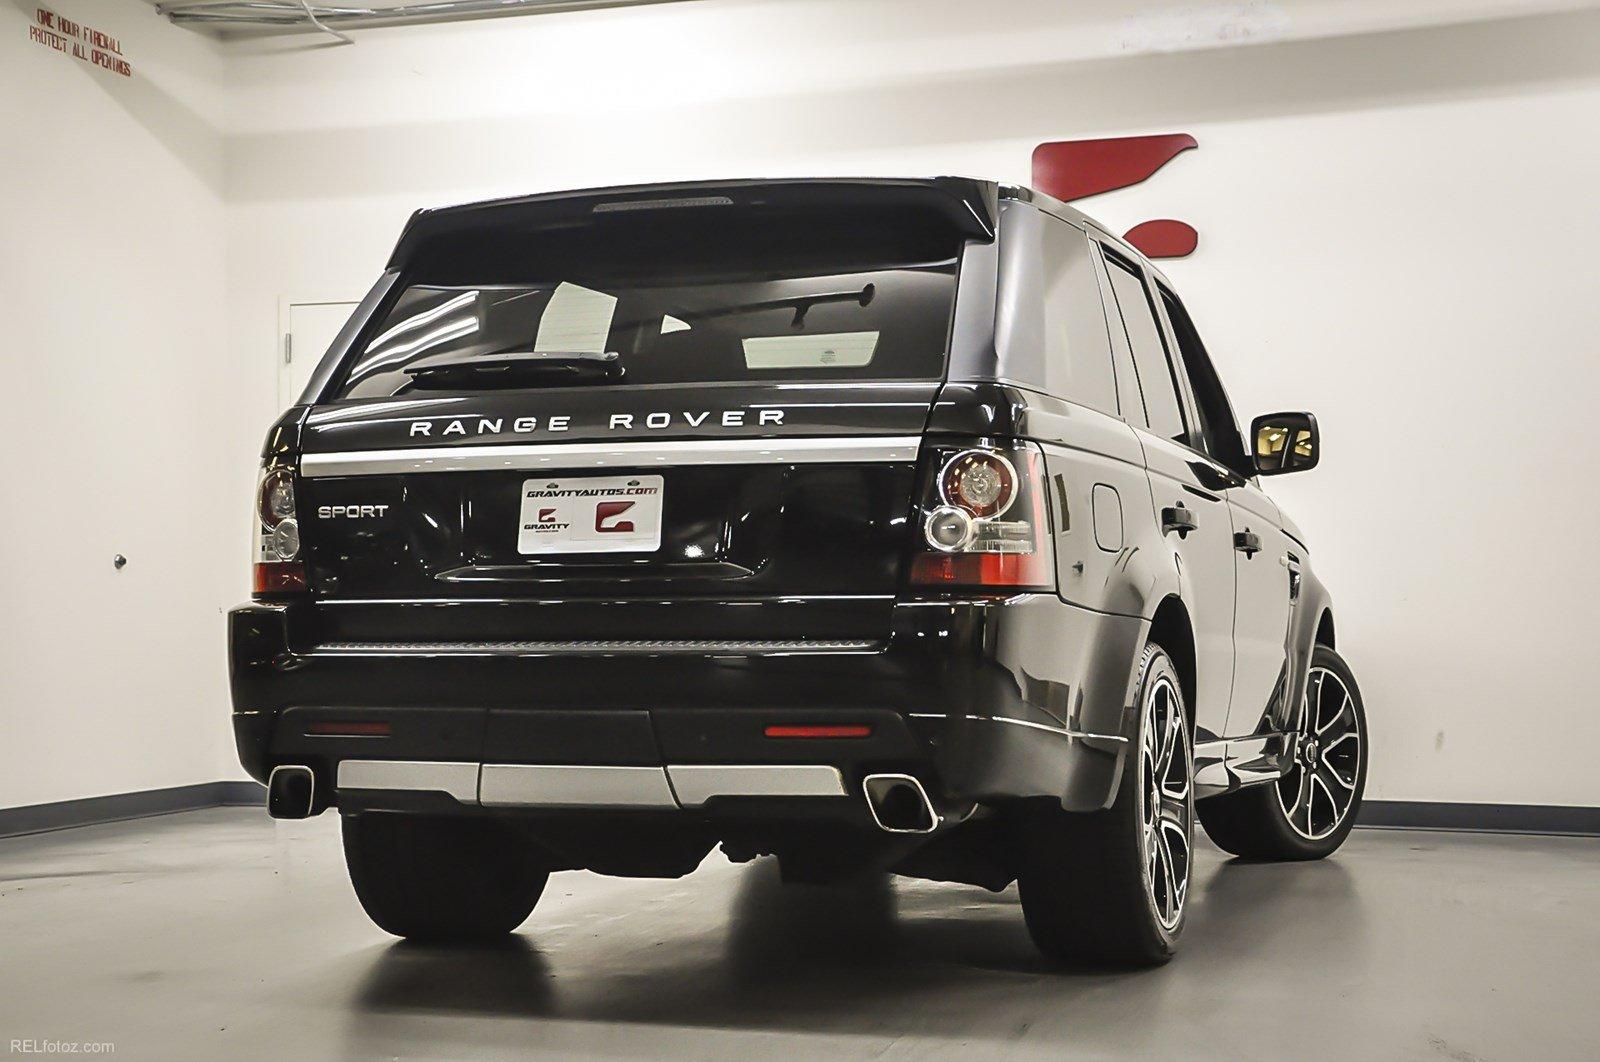 Used 2013 Land Rover Range Rover Sport HSE for sale Sold at Gravity Autos Marietta in Marietta GA 30060 4